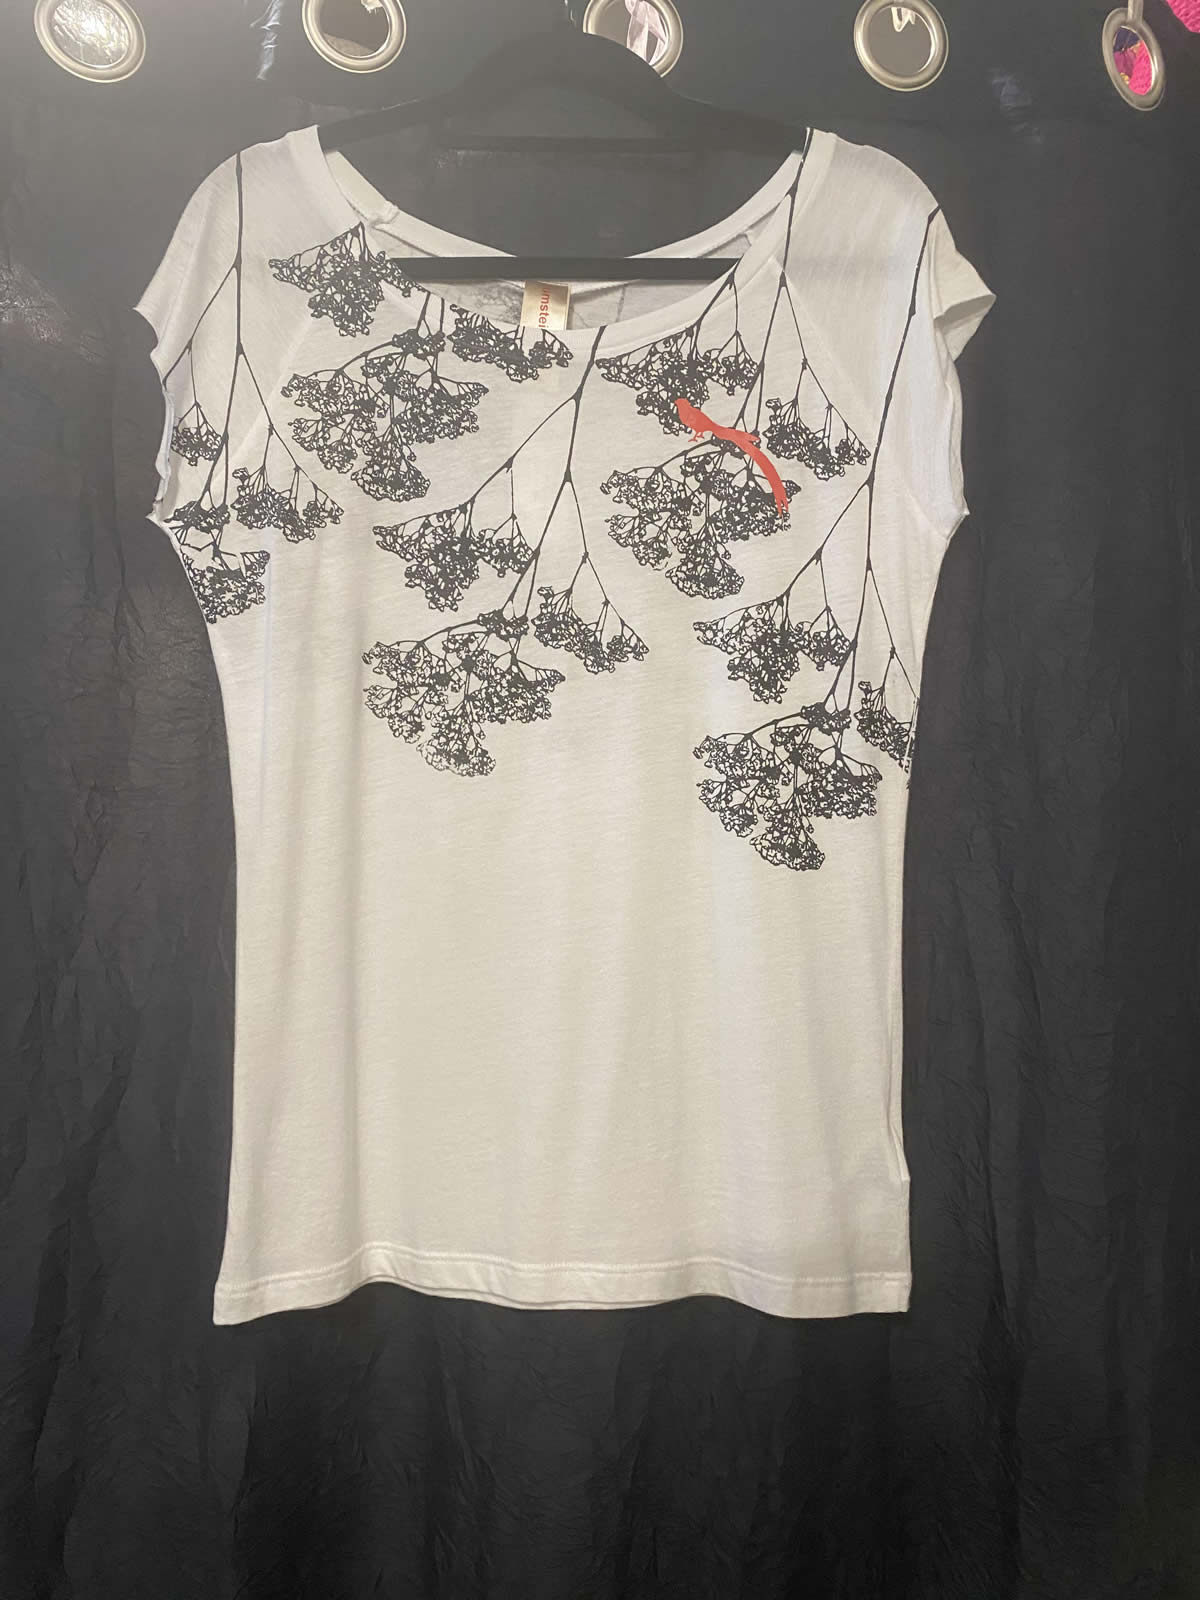 Umsteigen T-Shirt White Black Flowers Red Bird - From the Gecko Boutique